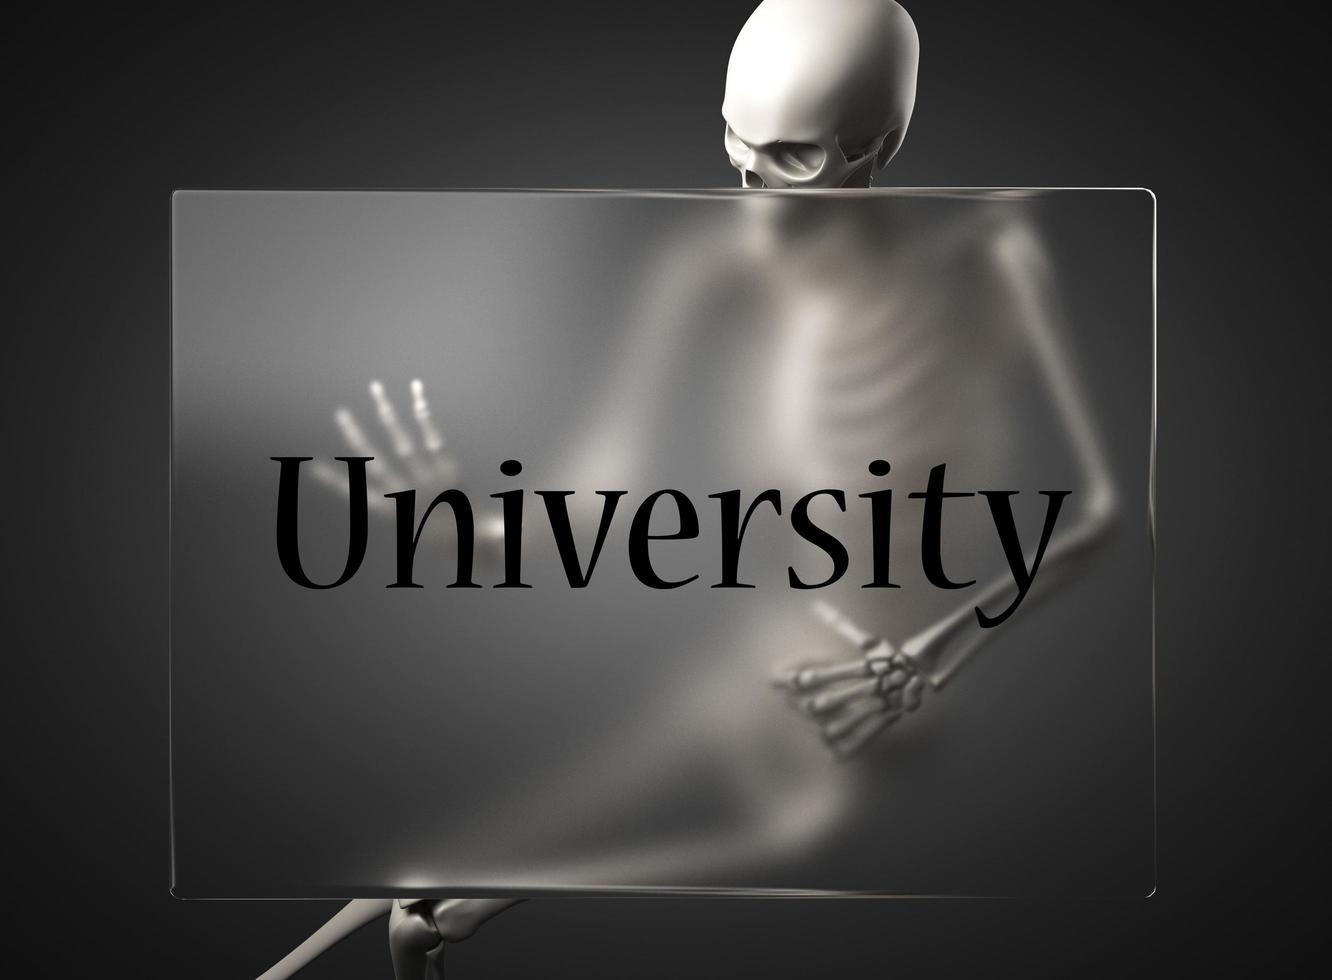 University word on glass and skeleton photo